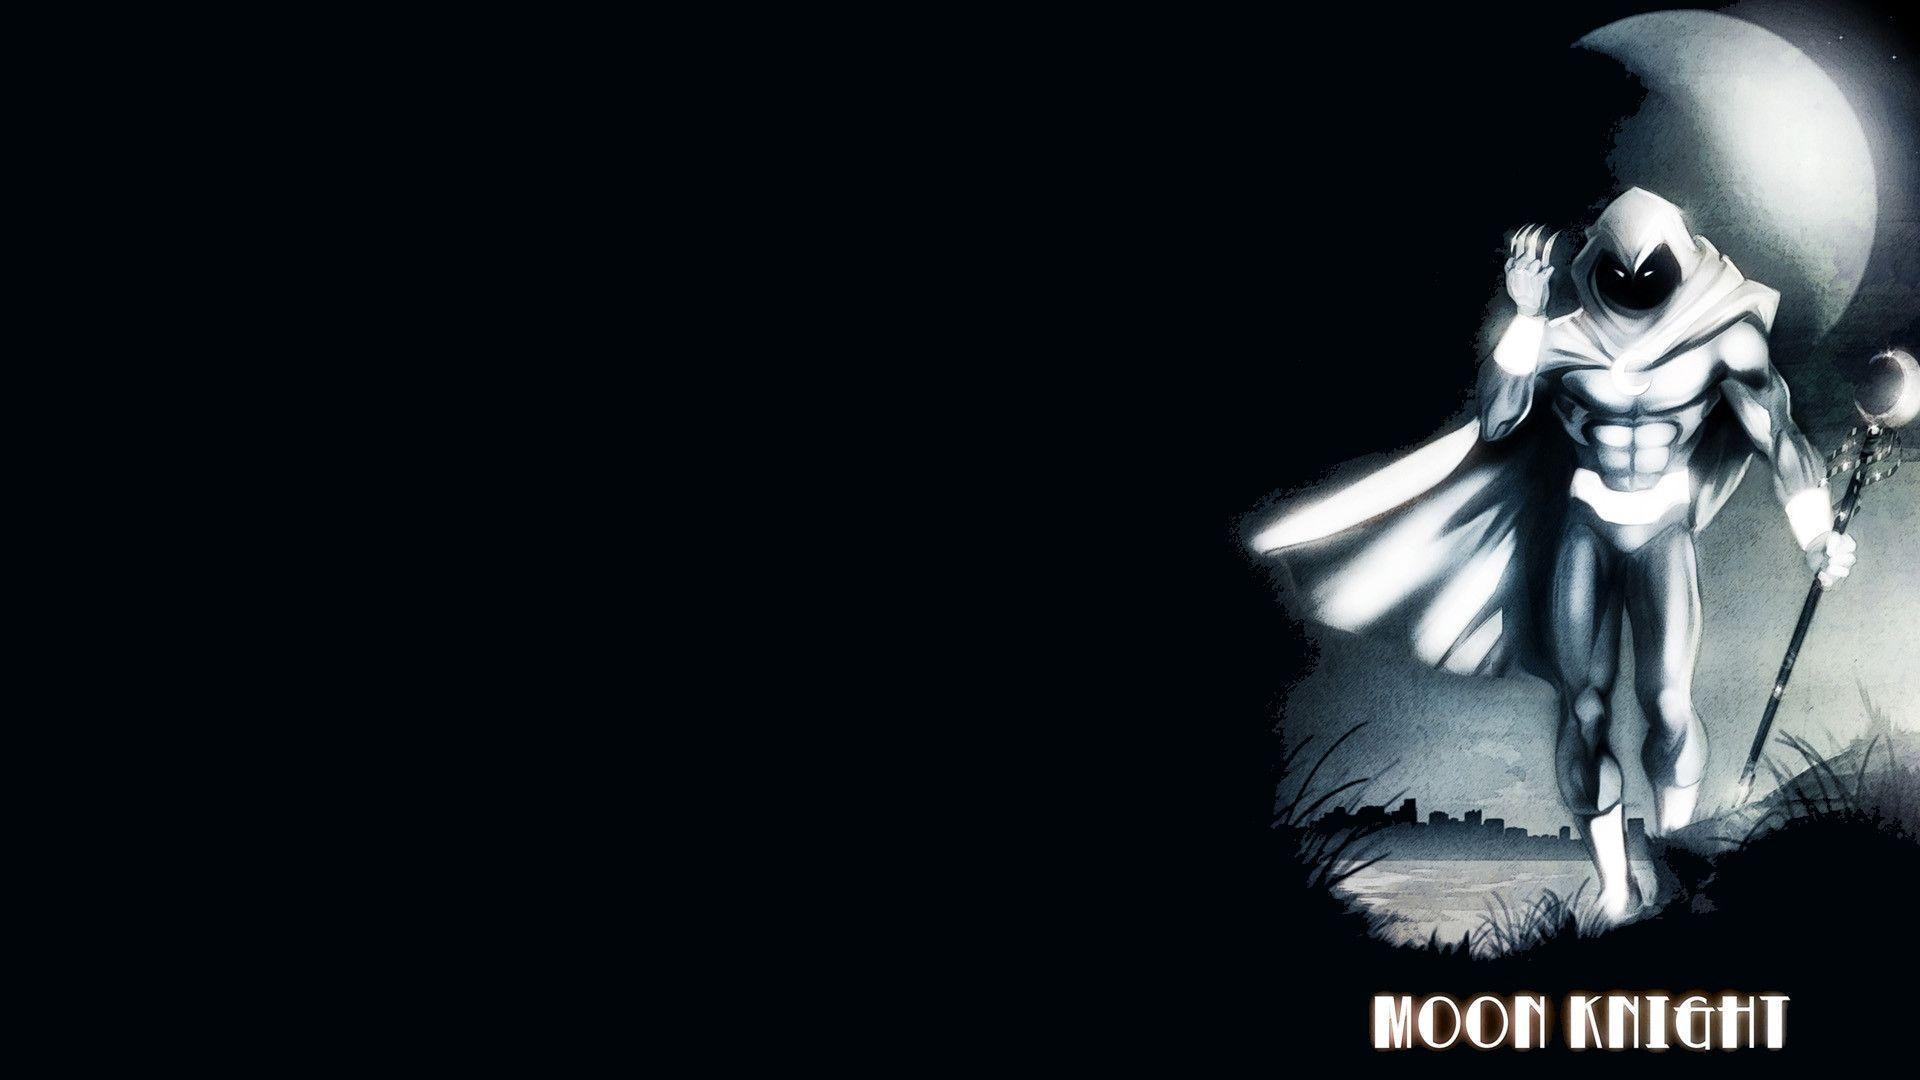 Moon Knight Computer Wallpaper, Desktop Background 1920x1080 Id